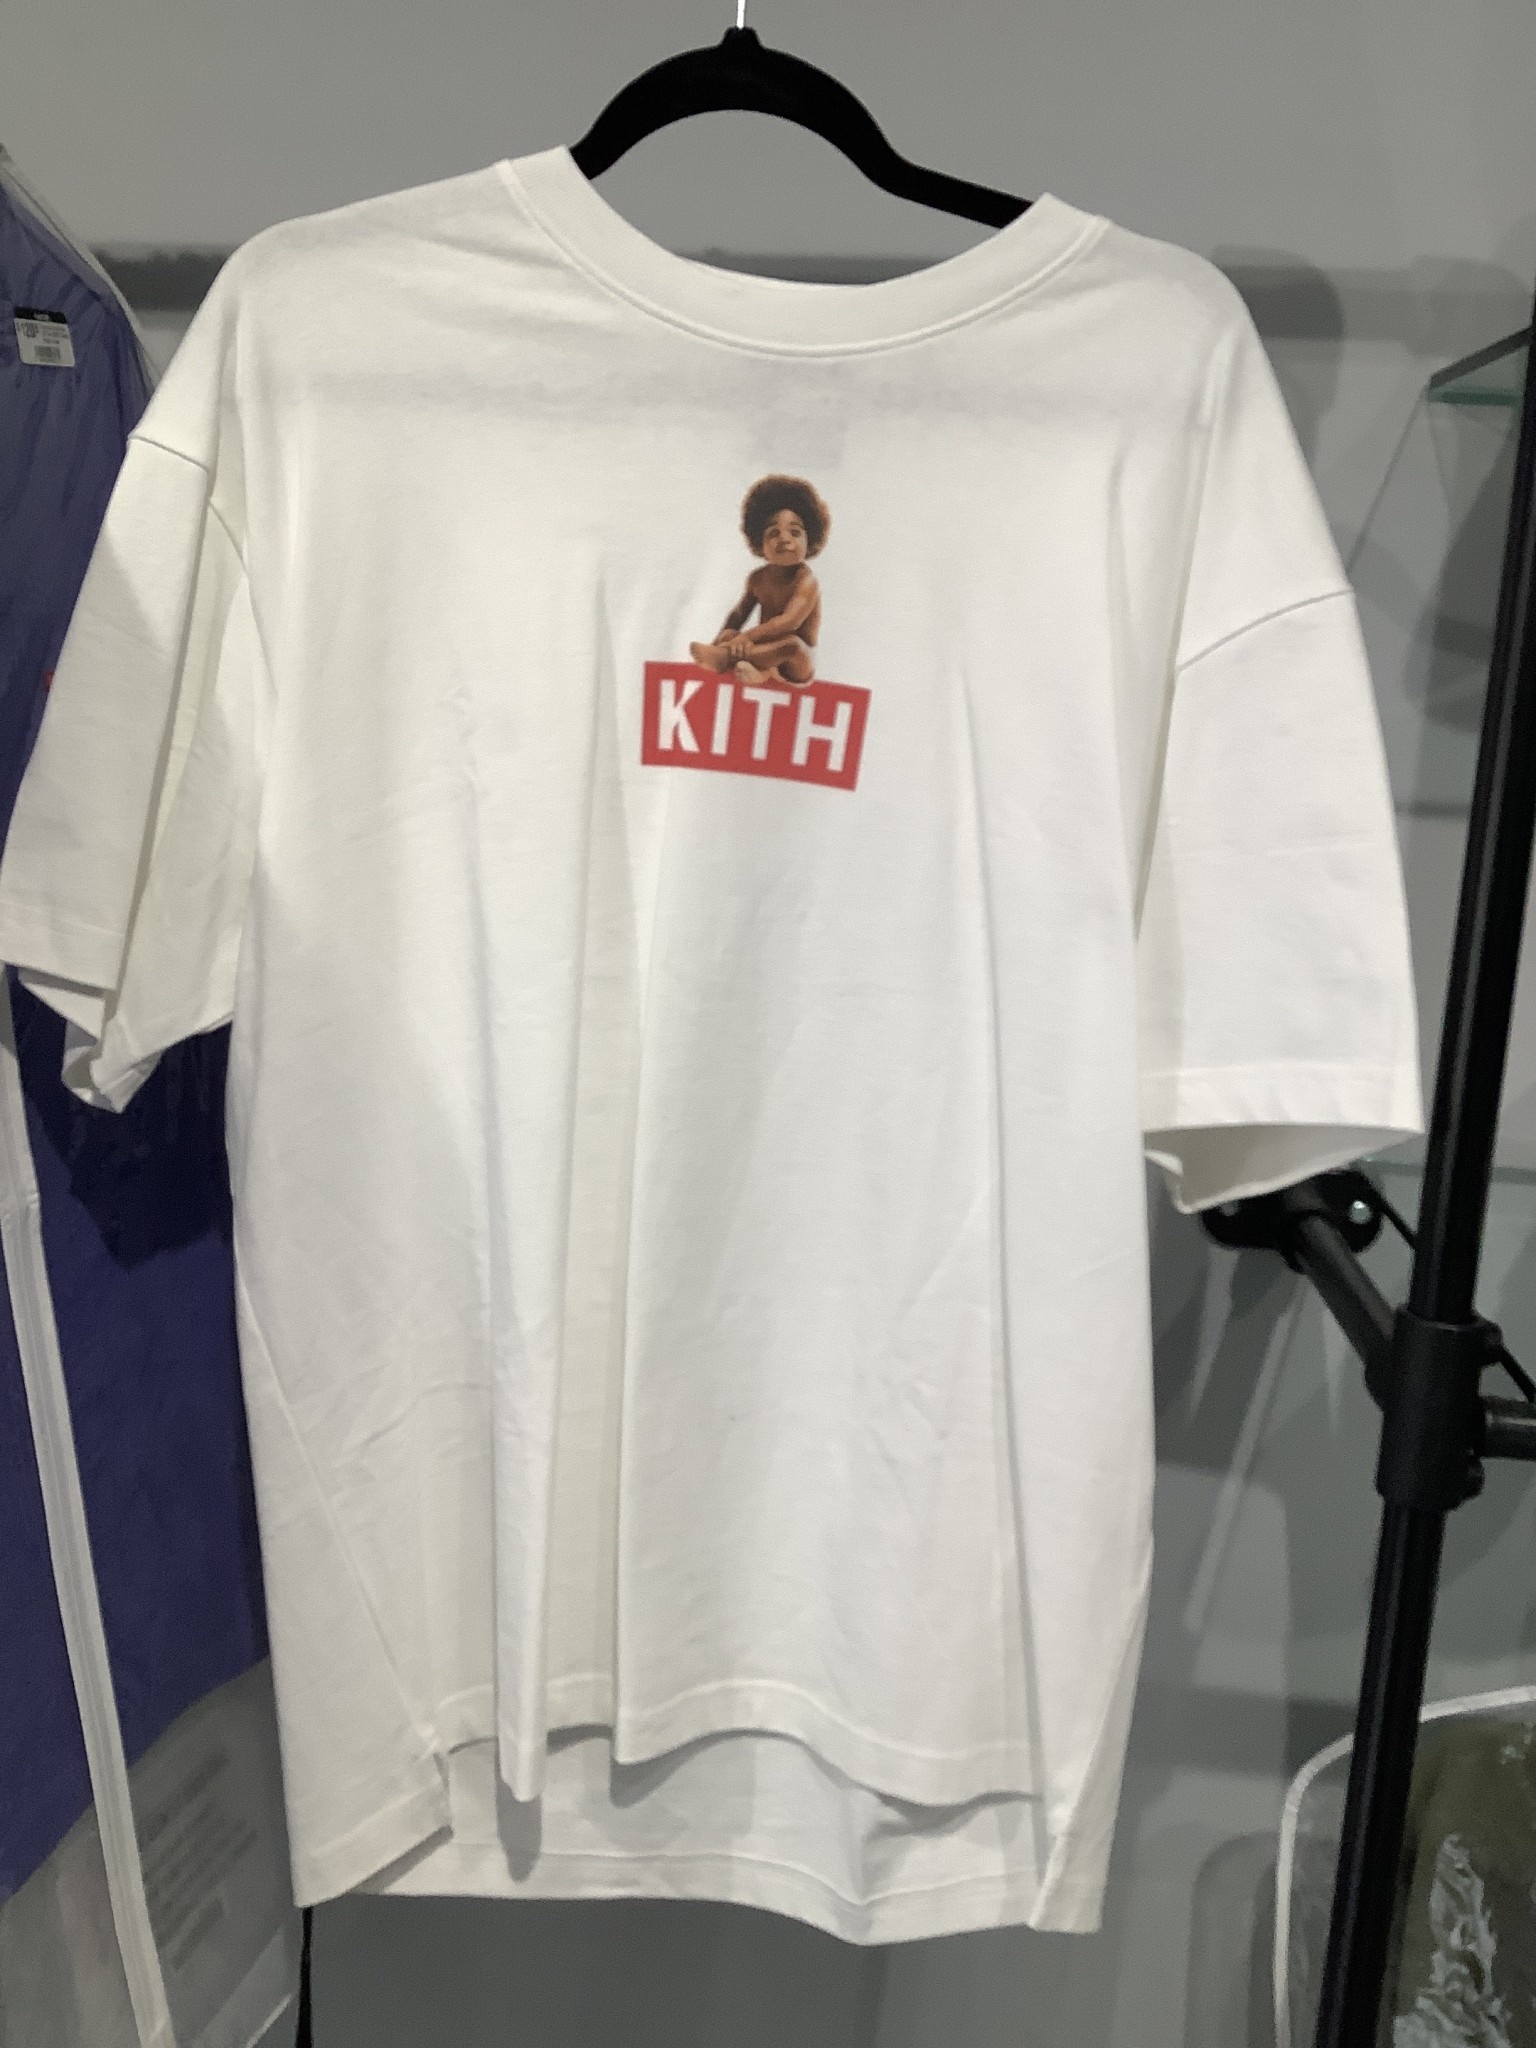 Kith Biggie Box Logo t-shirt - Grail City Shoes and Clothing